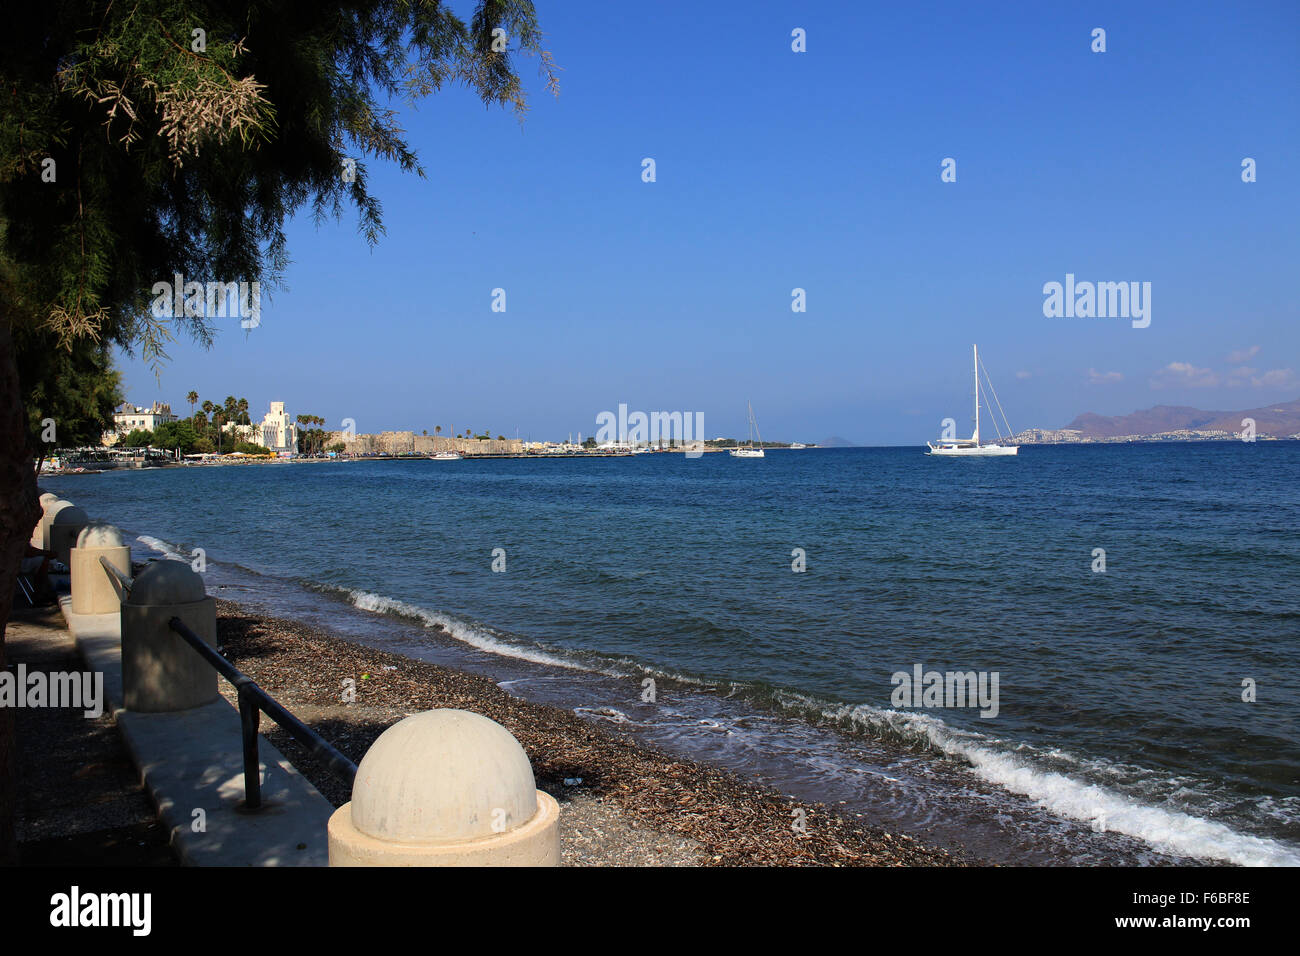 Kos old town Harbour Greece Promenade Stock Photo